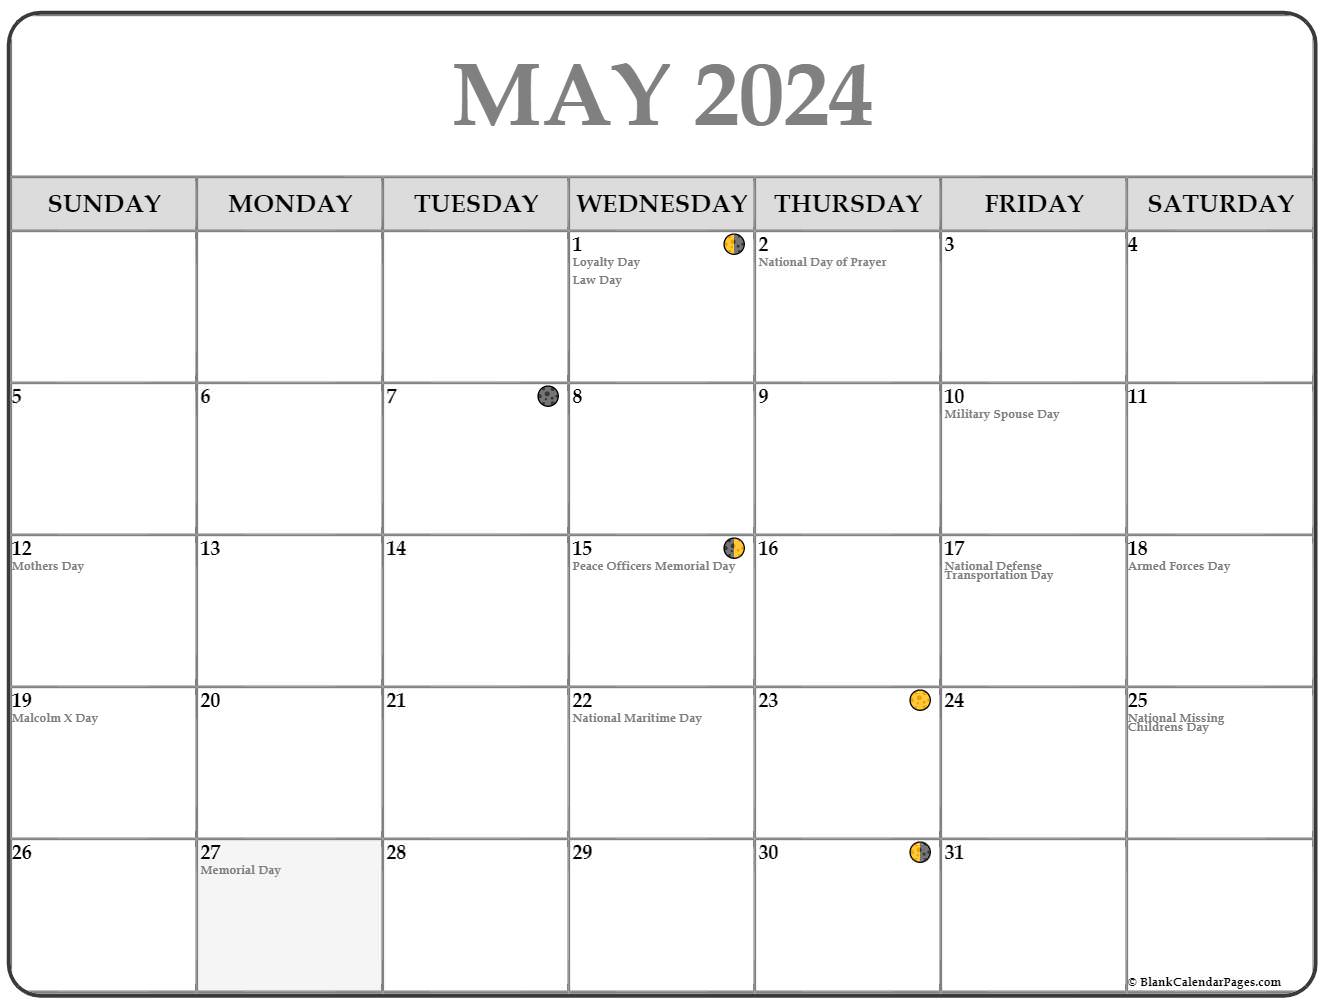 Full Moon May 2022 Calendar May 2022 Lunar Calendar | Moon Phase Calendar